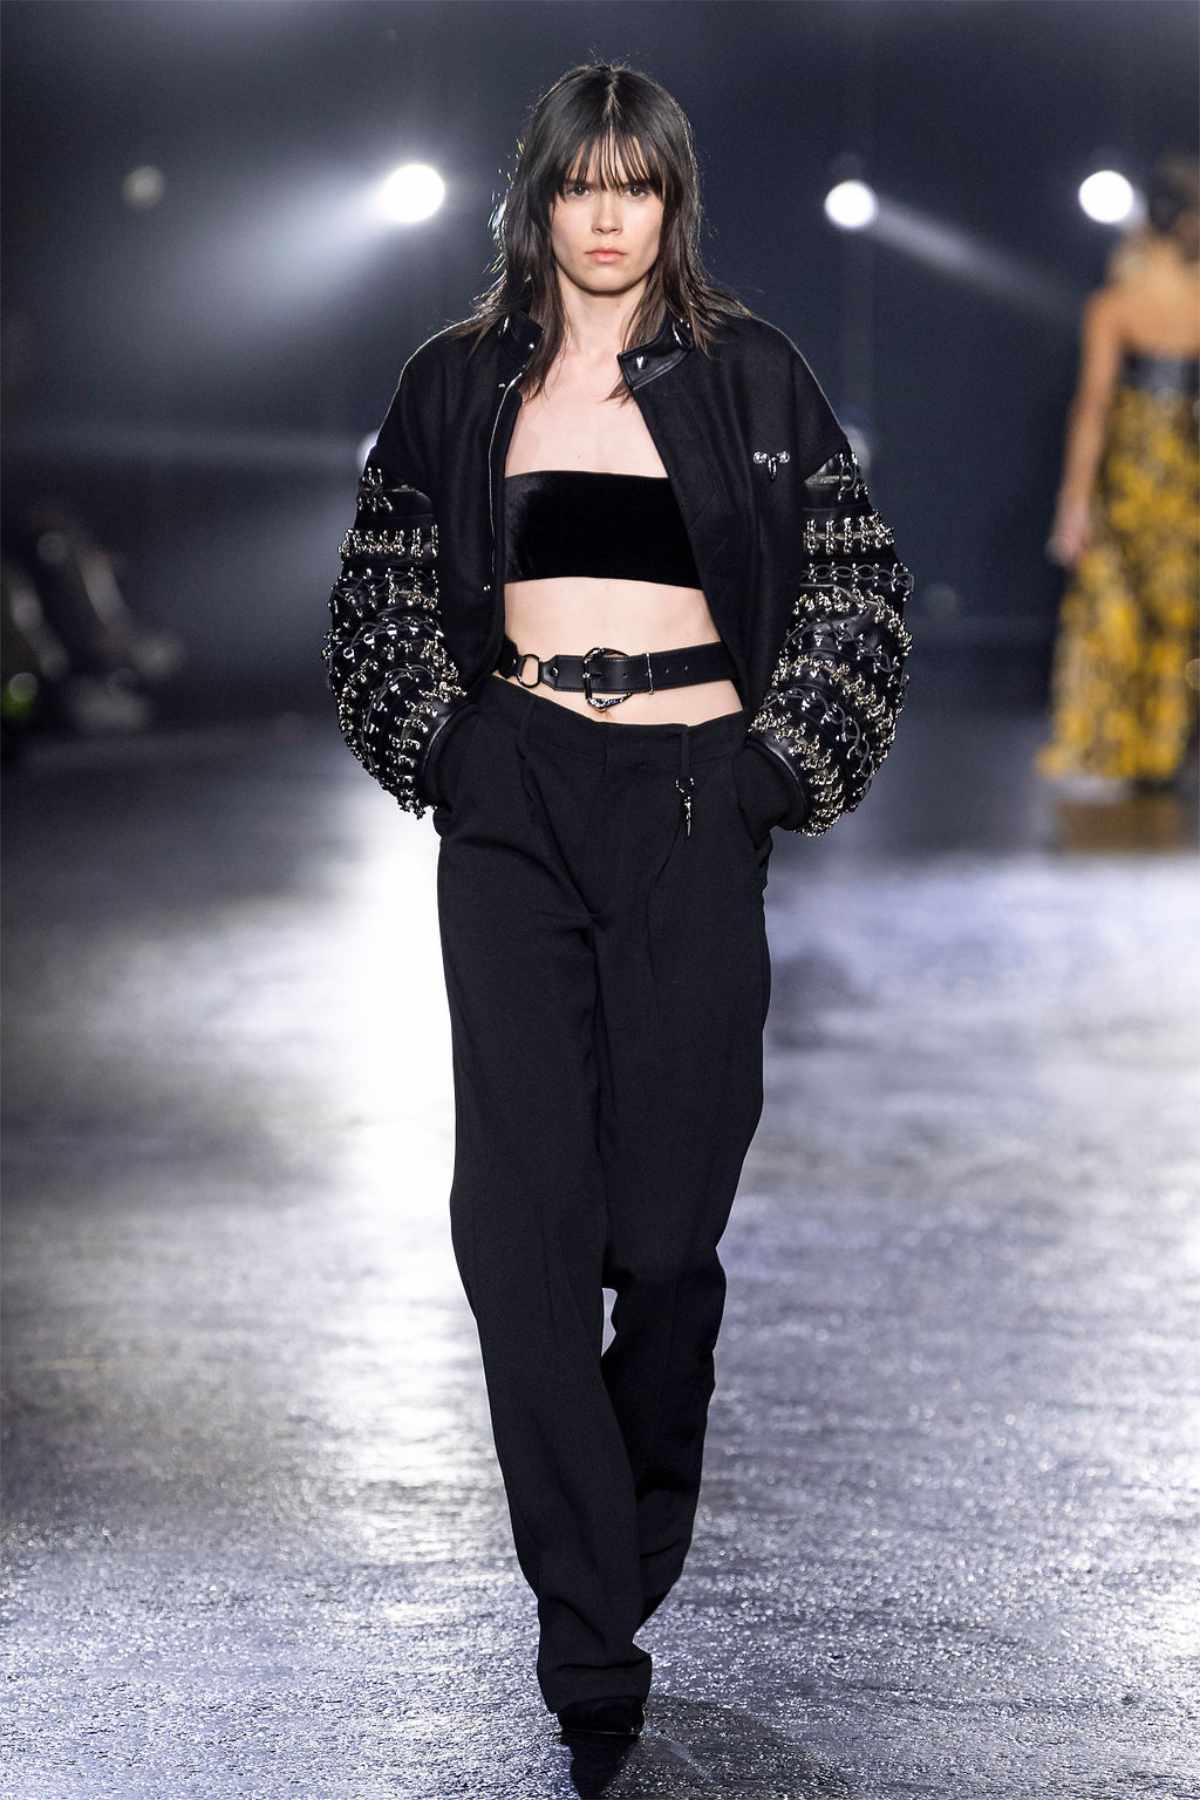 Roberto Cavalli Presents Its New Fall/Winter 2022-23 Womenswear Collection